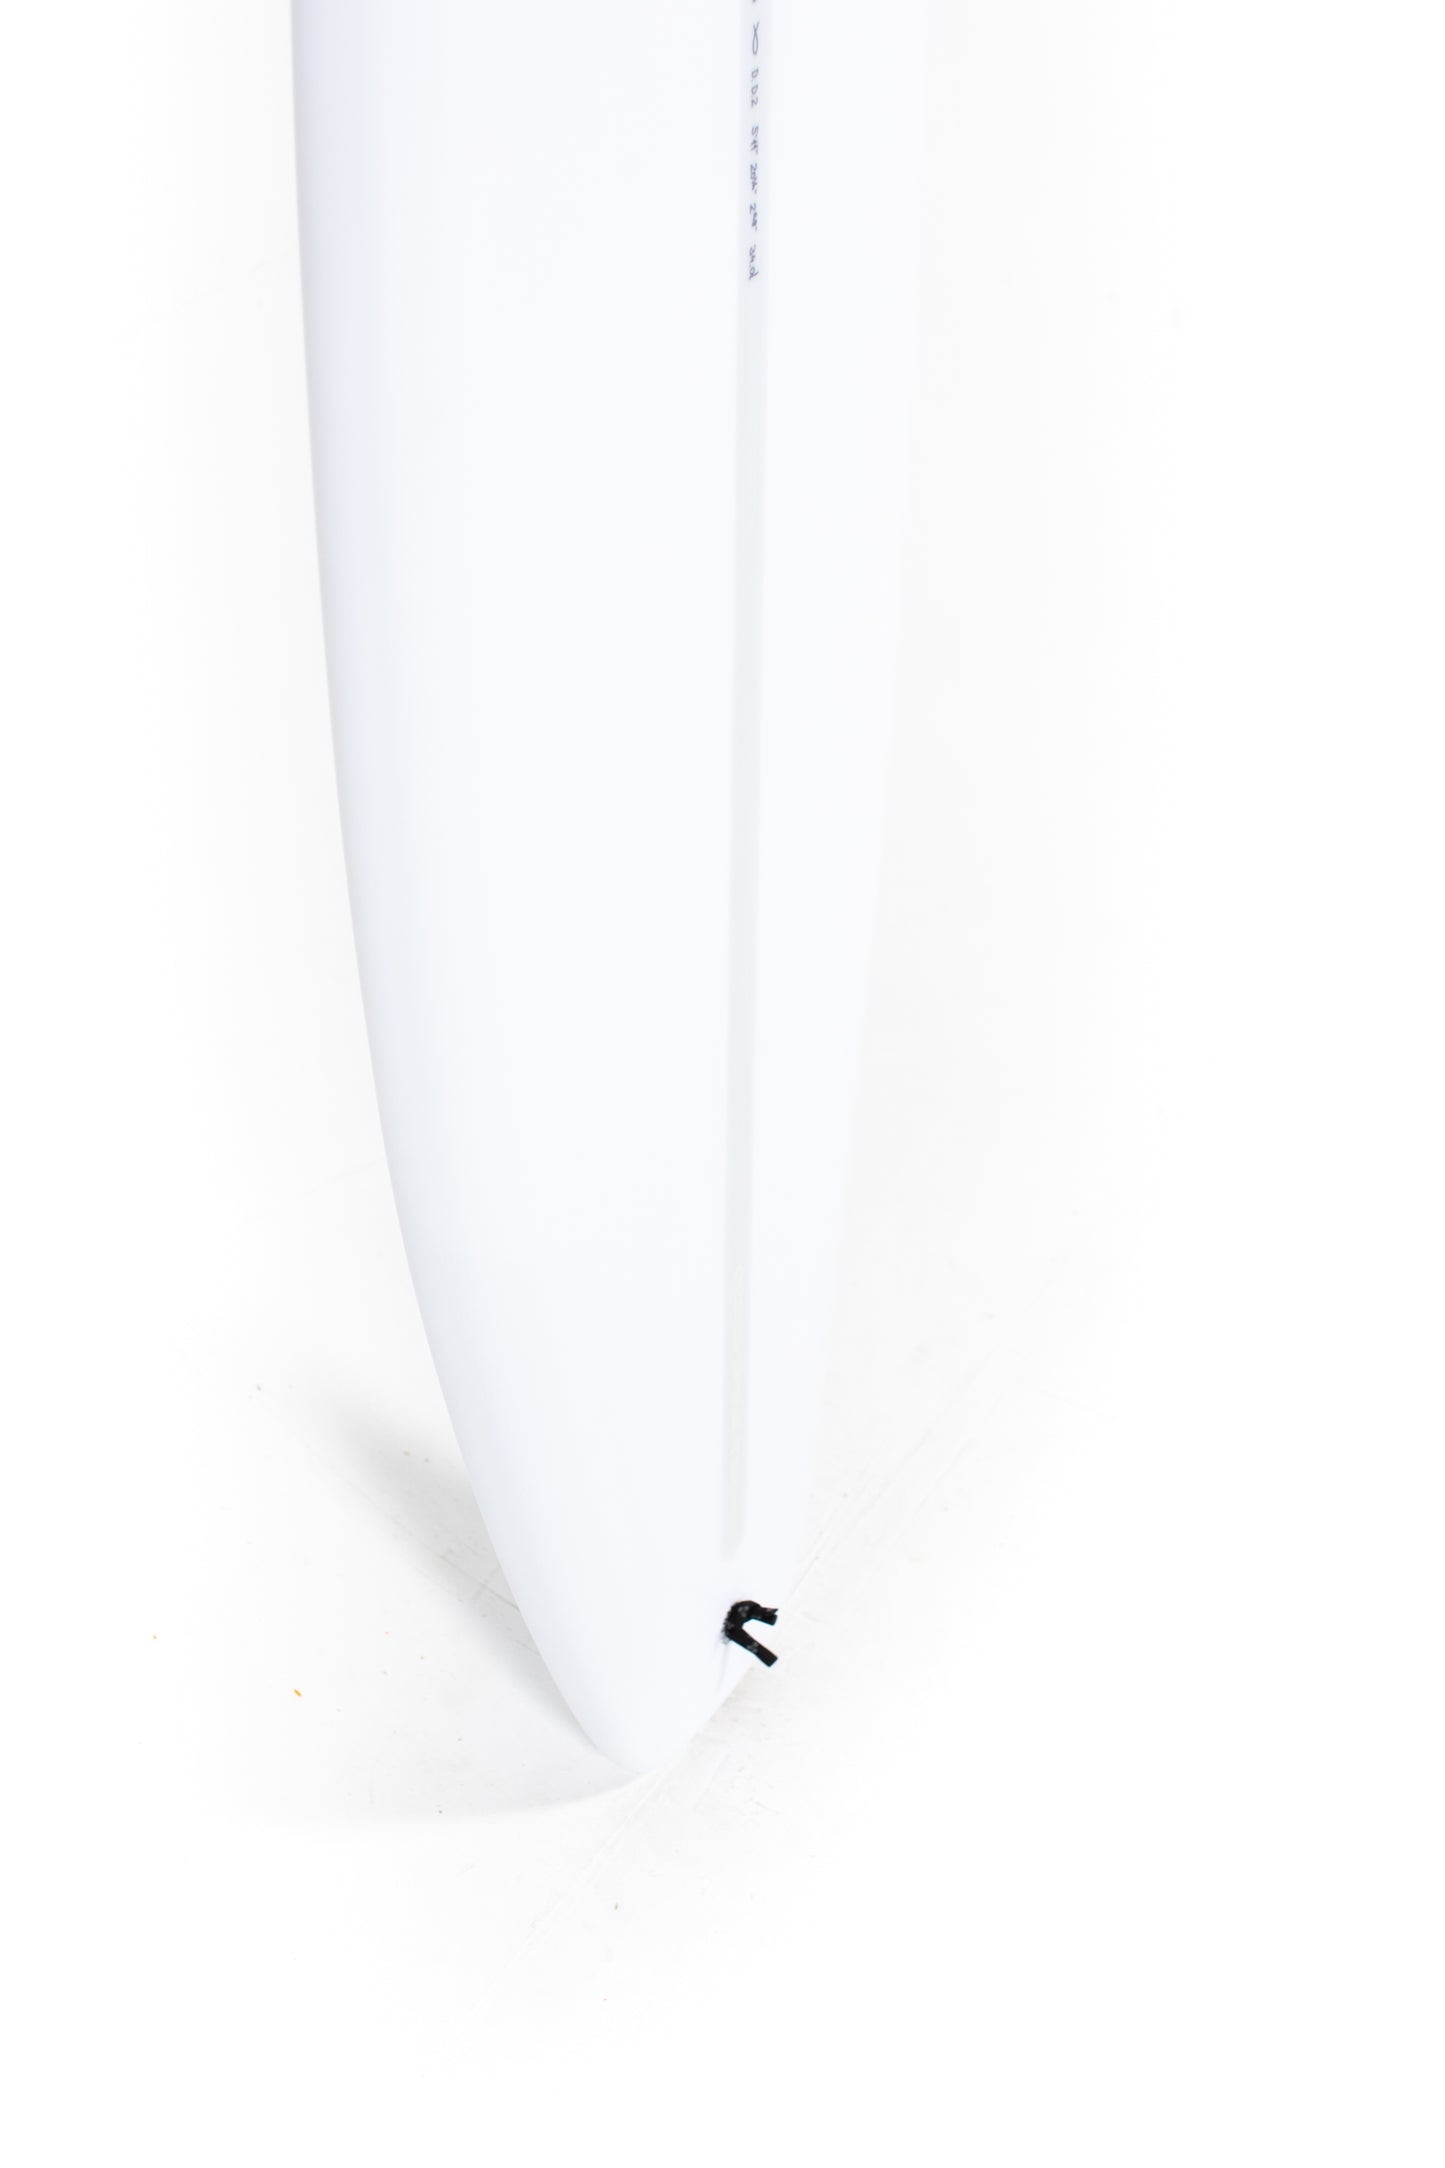 
                  
                    Pukas Surf Shop - Channel Islands - DUMPSTER DIVER 2 Spine Tek by Britt Merrick -  5'11" x 20 1/4 x 2 5/8 - 34,03L - CI31319
                  
                